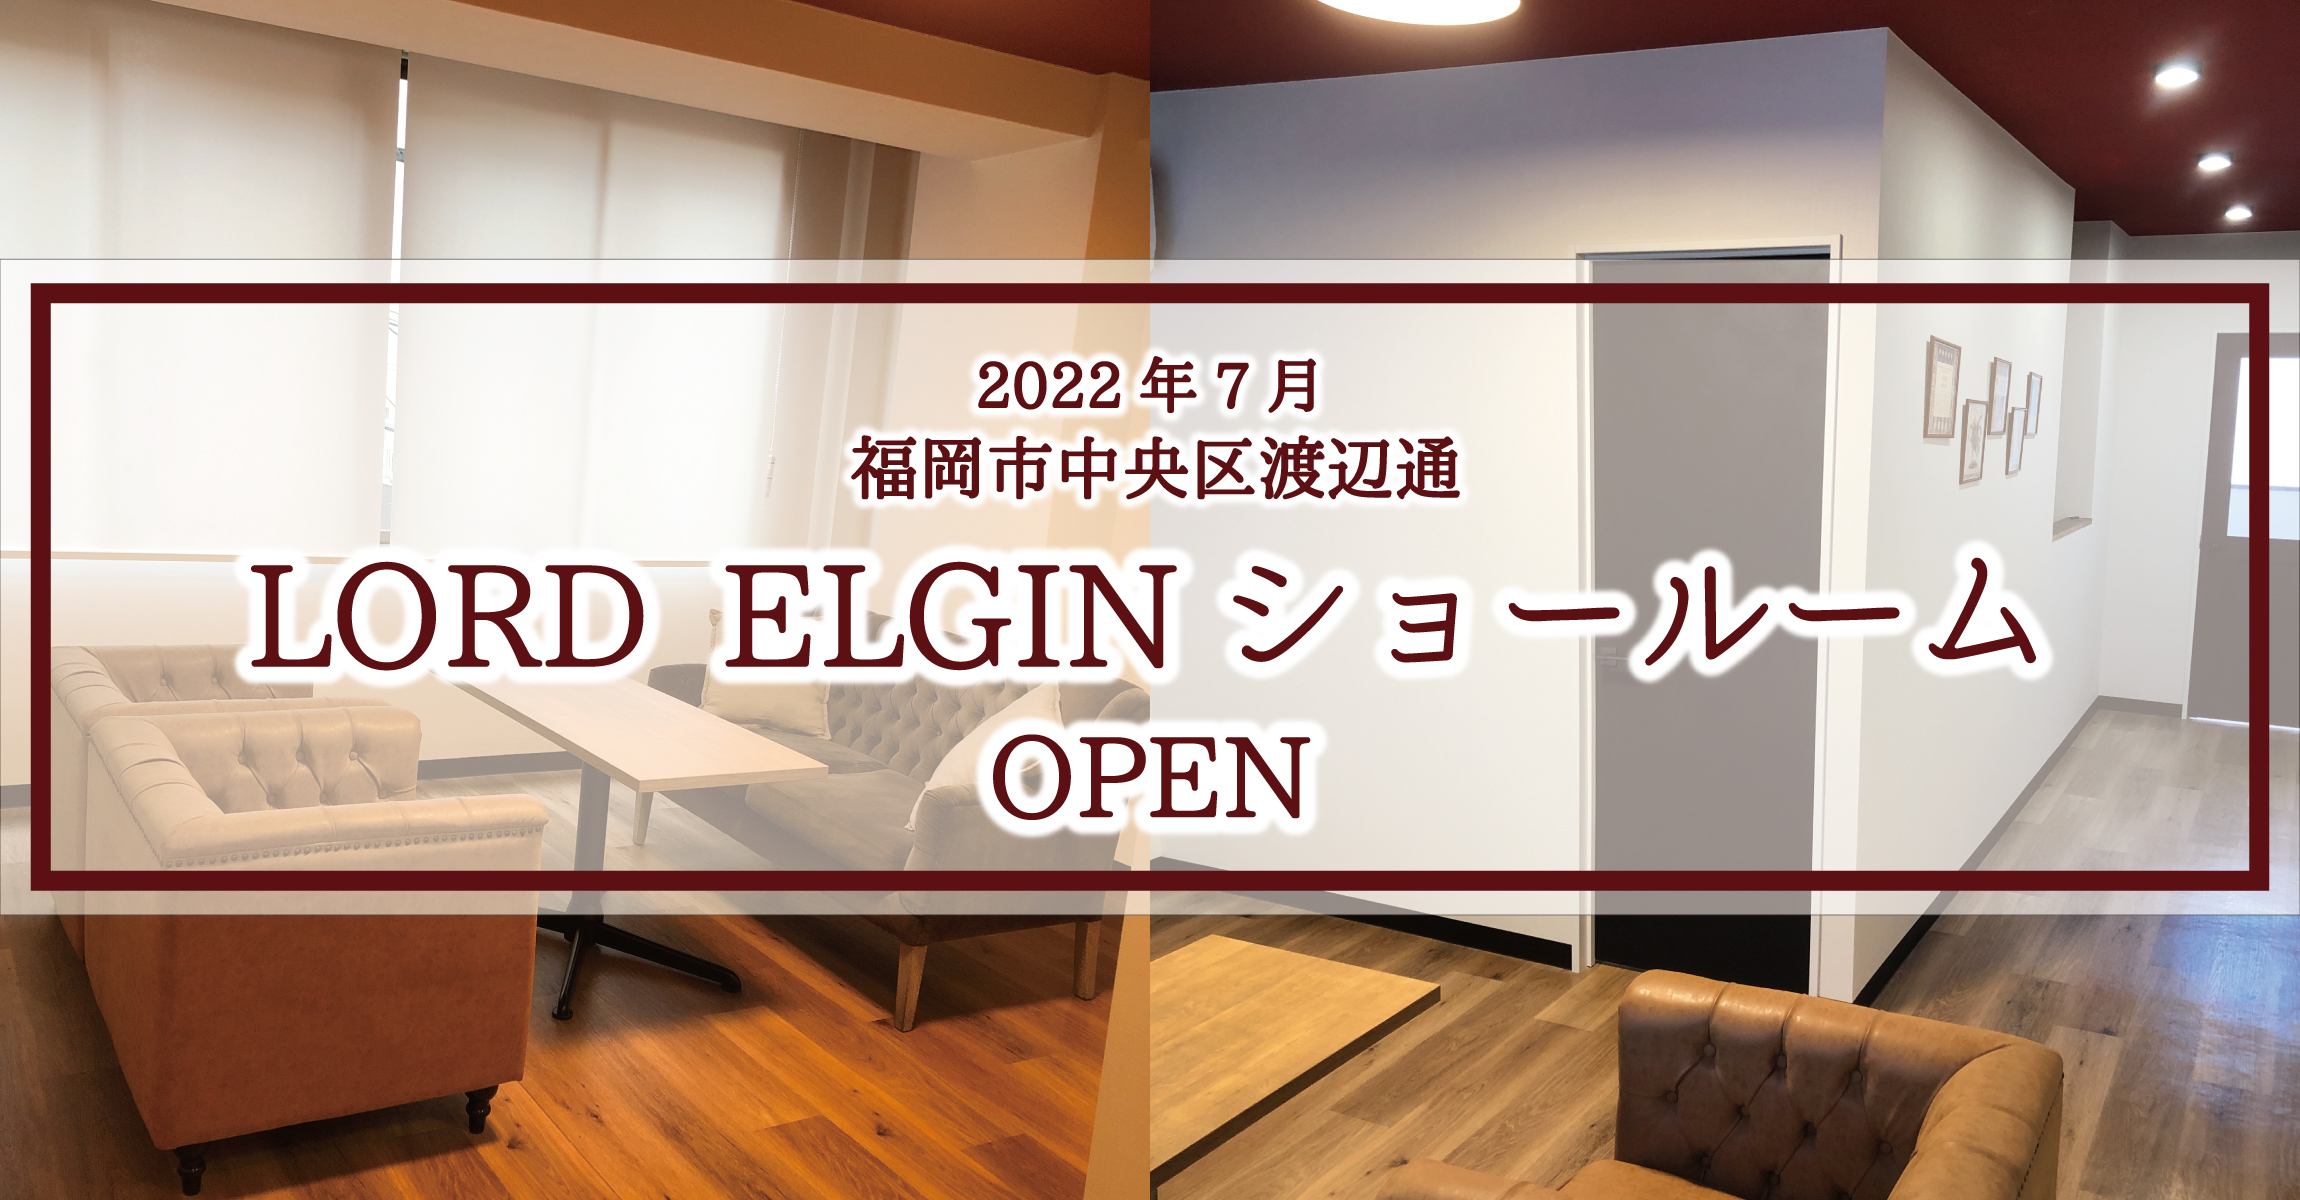 <b>福岡市中央区渡辺通<br>
LOAD ELGIN ショールームをオープン</b>